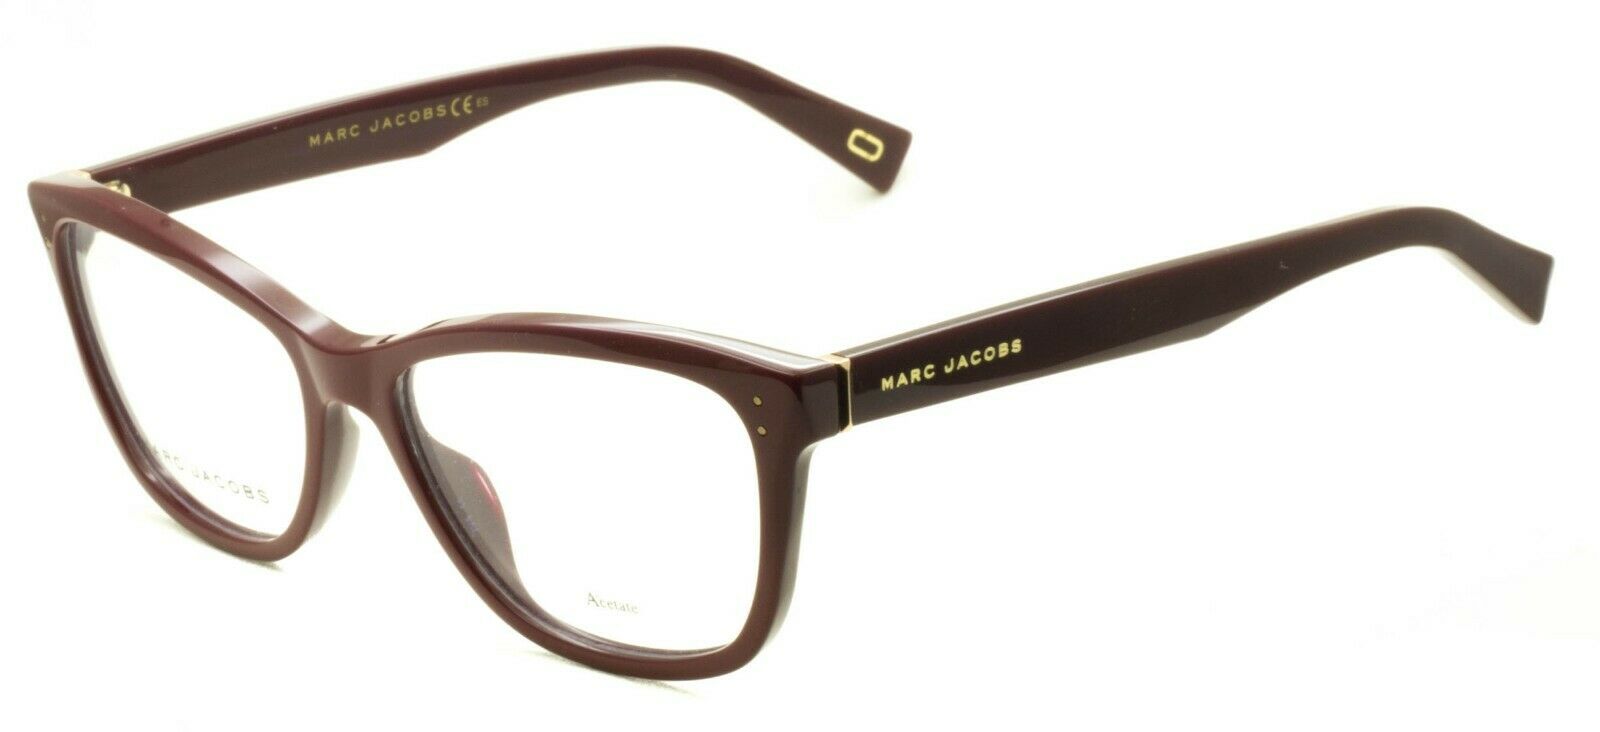 MARC JACOBS MARC 123 OXU 53mm FRAMES RX Optical Glasses Eyeglasses New - TRUSTED